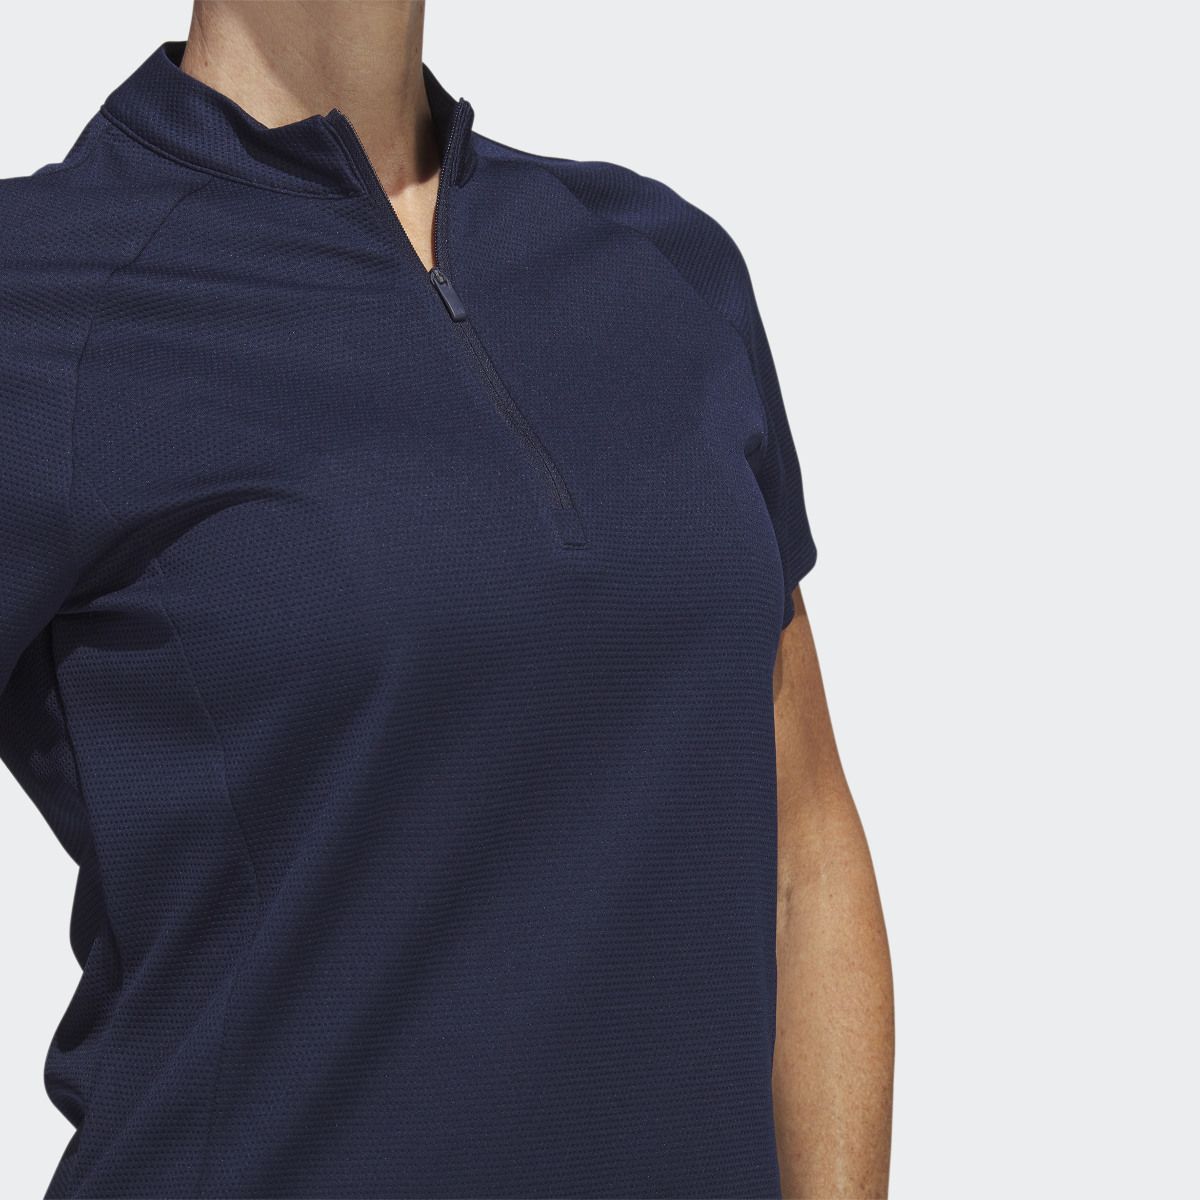 Adidas Textured Golf Polo Shirt. 6